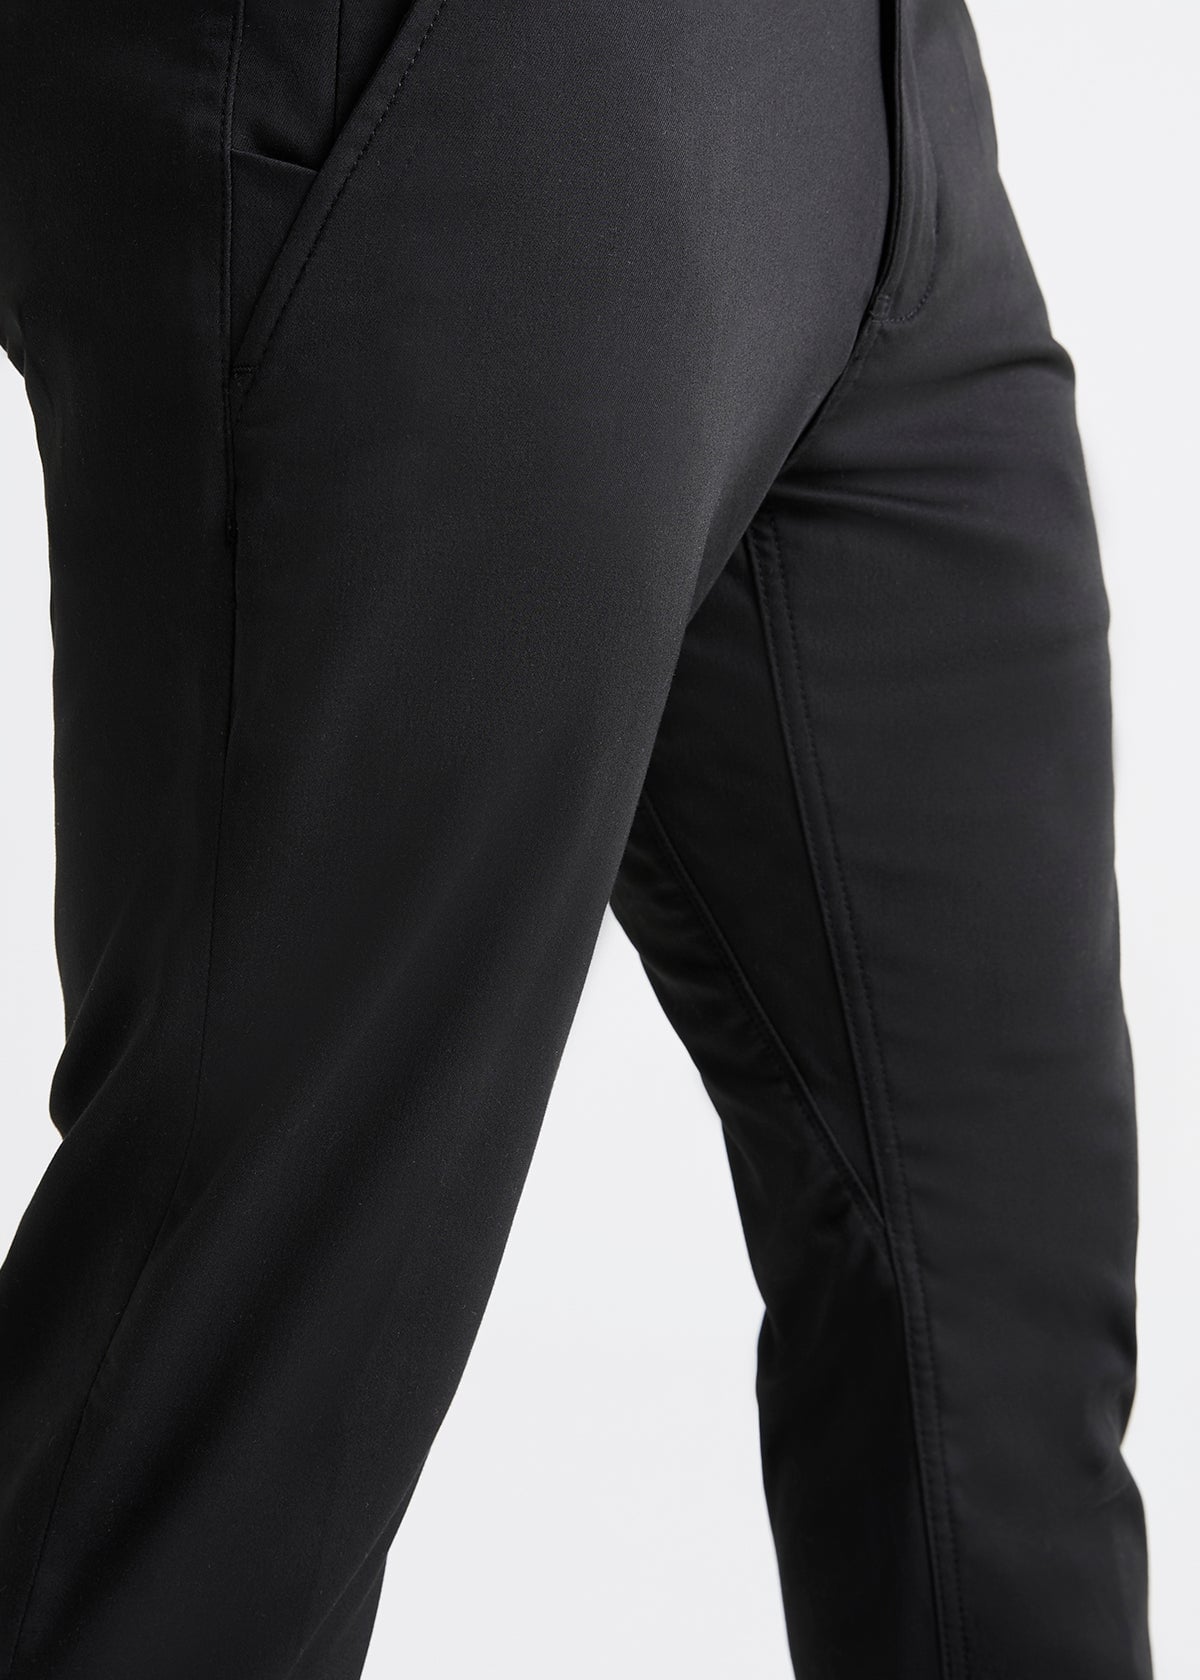 Men's Black Pant Outfits Ideas With Shirts Combination | Men fashion casual  shirts, Men fashion casual outfits, Black pants men